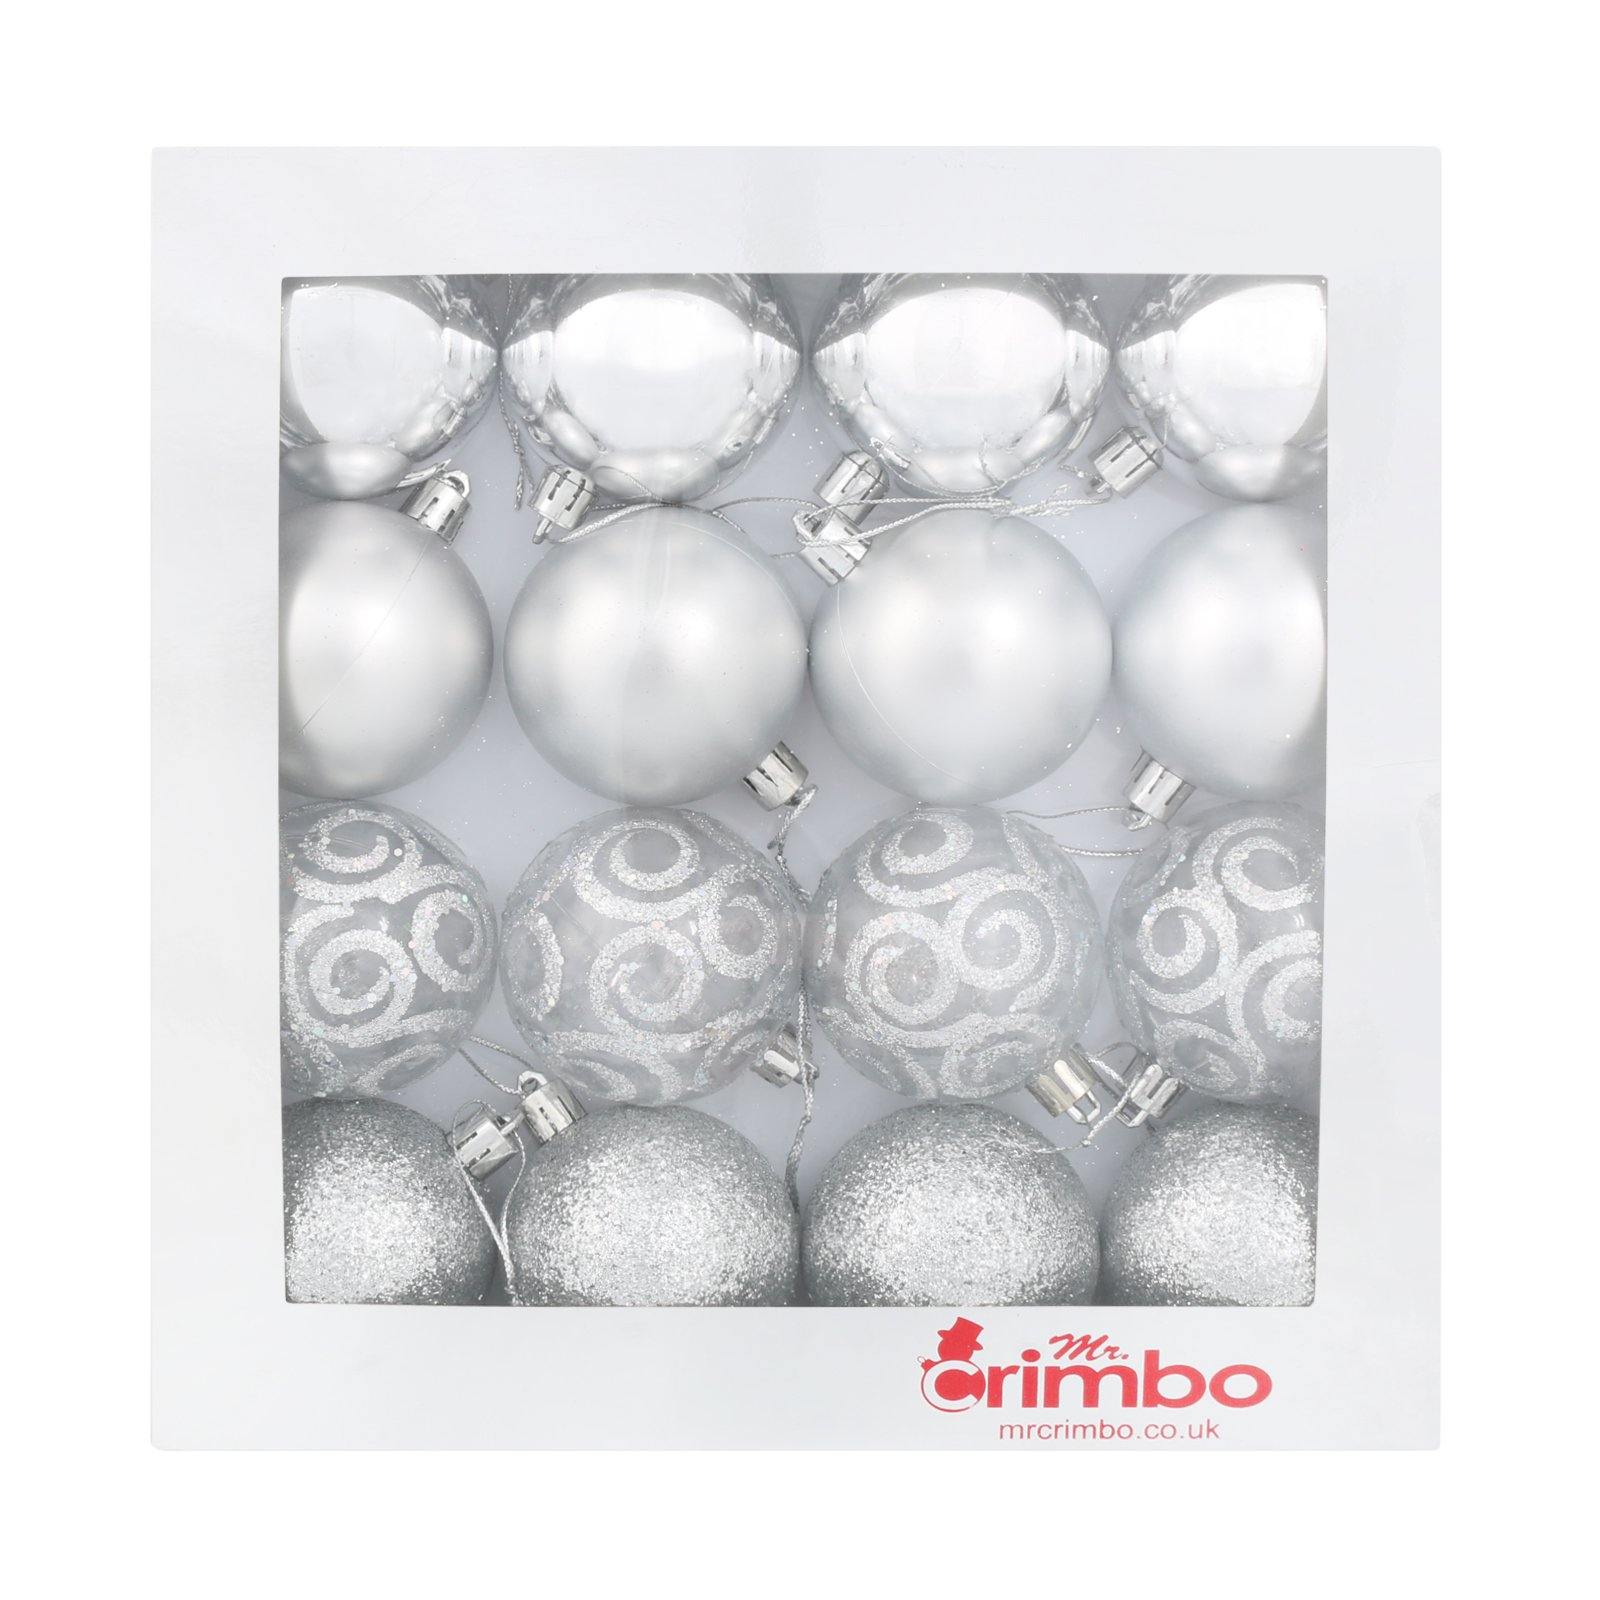 Mr Crimbo 16 x 6cm Christmas Tree Baubles Various Colours - MrCrimbo.co.uk -XS5700 - Silver -Baubles